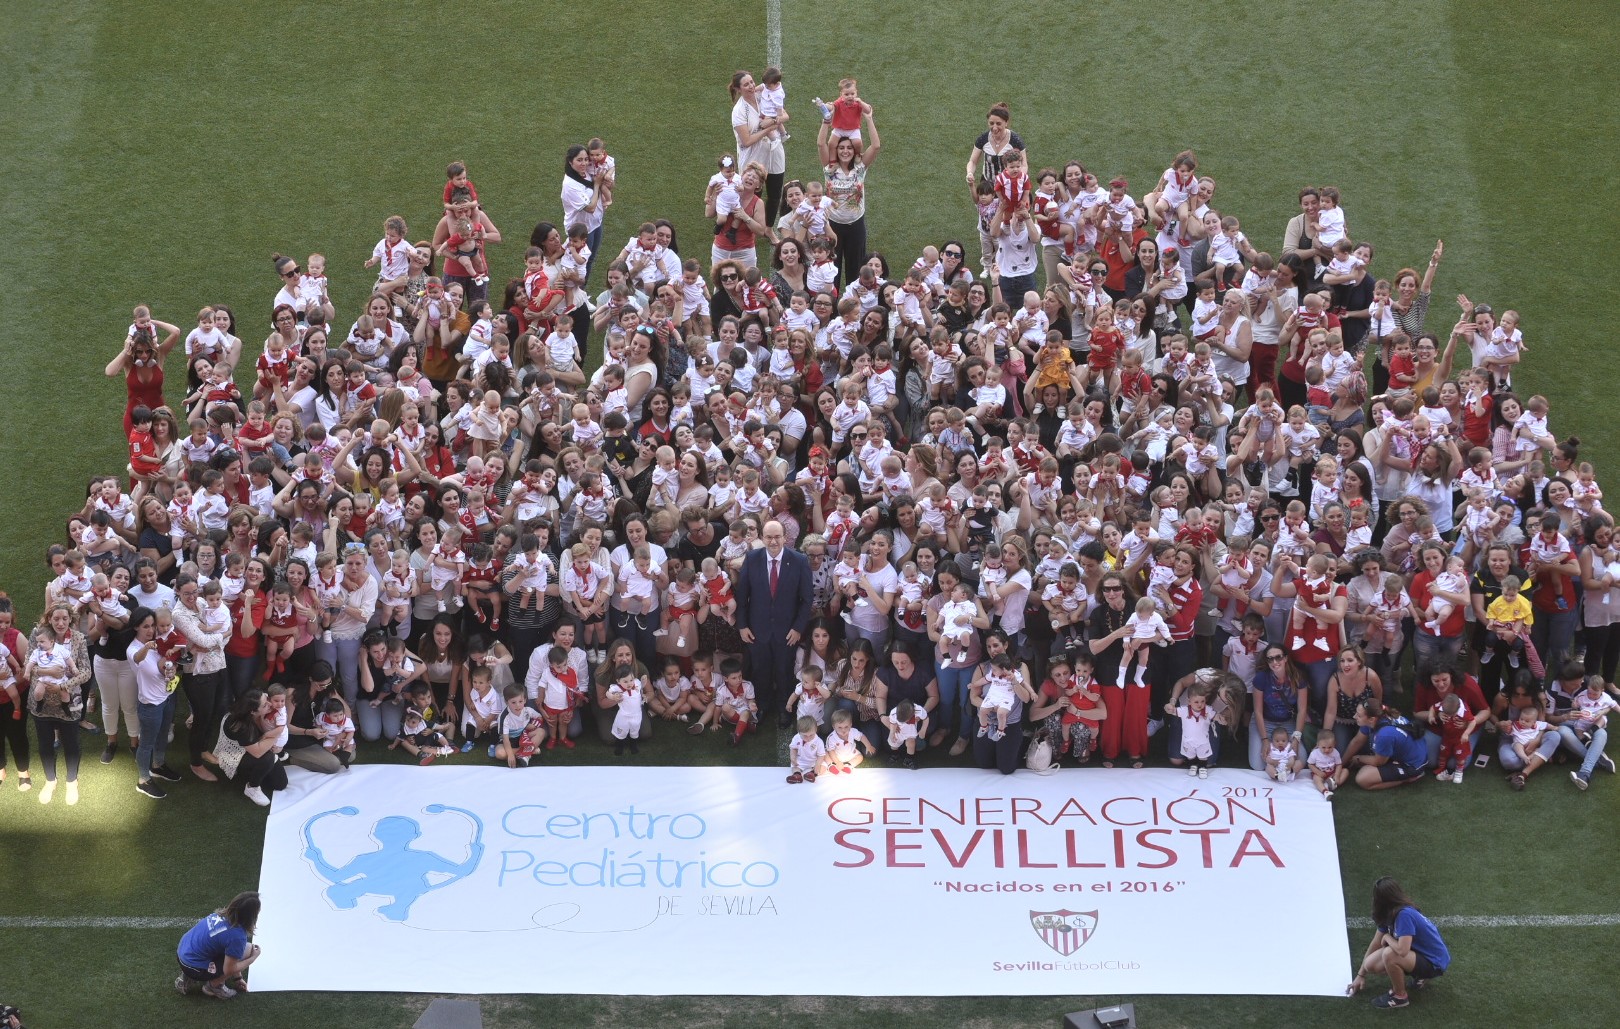 Photo of the Sevillista Generation